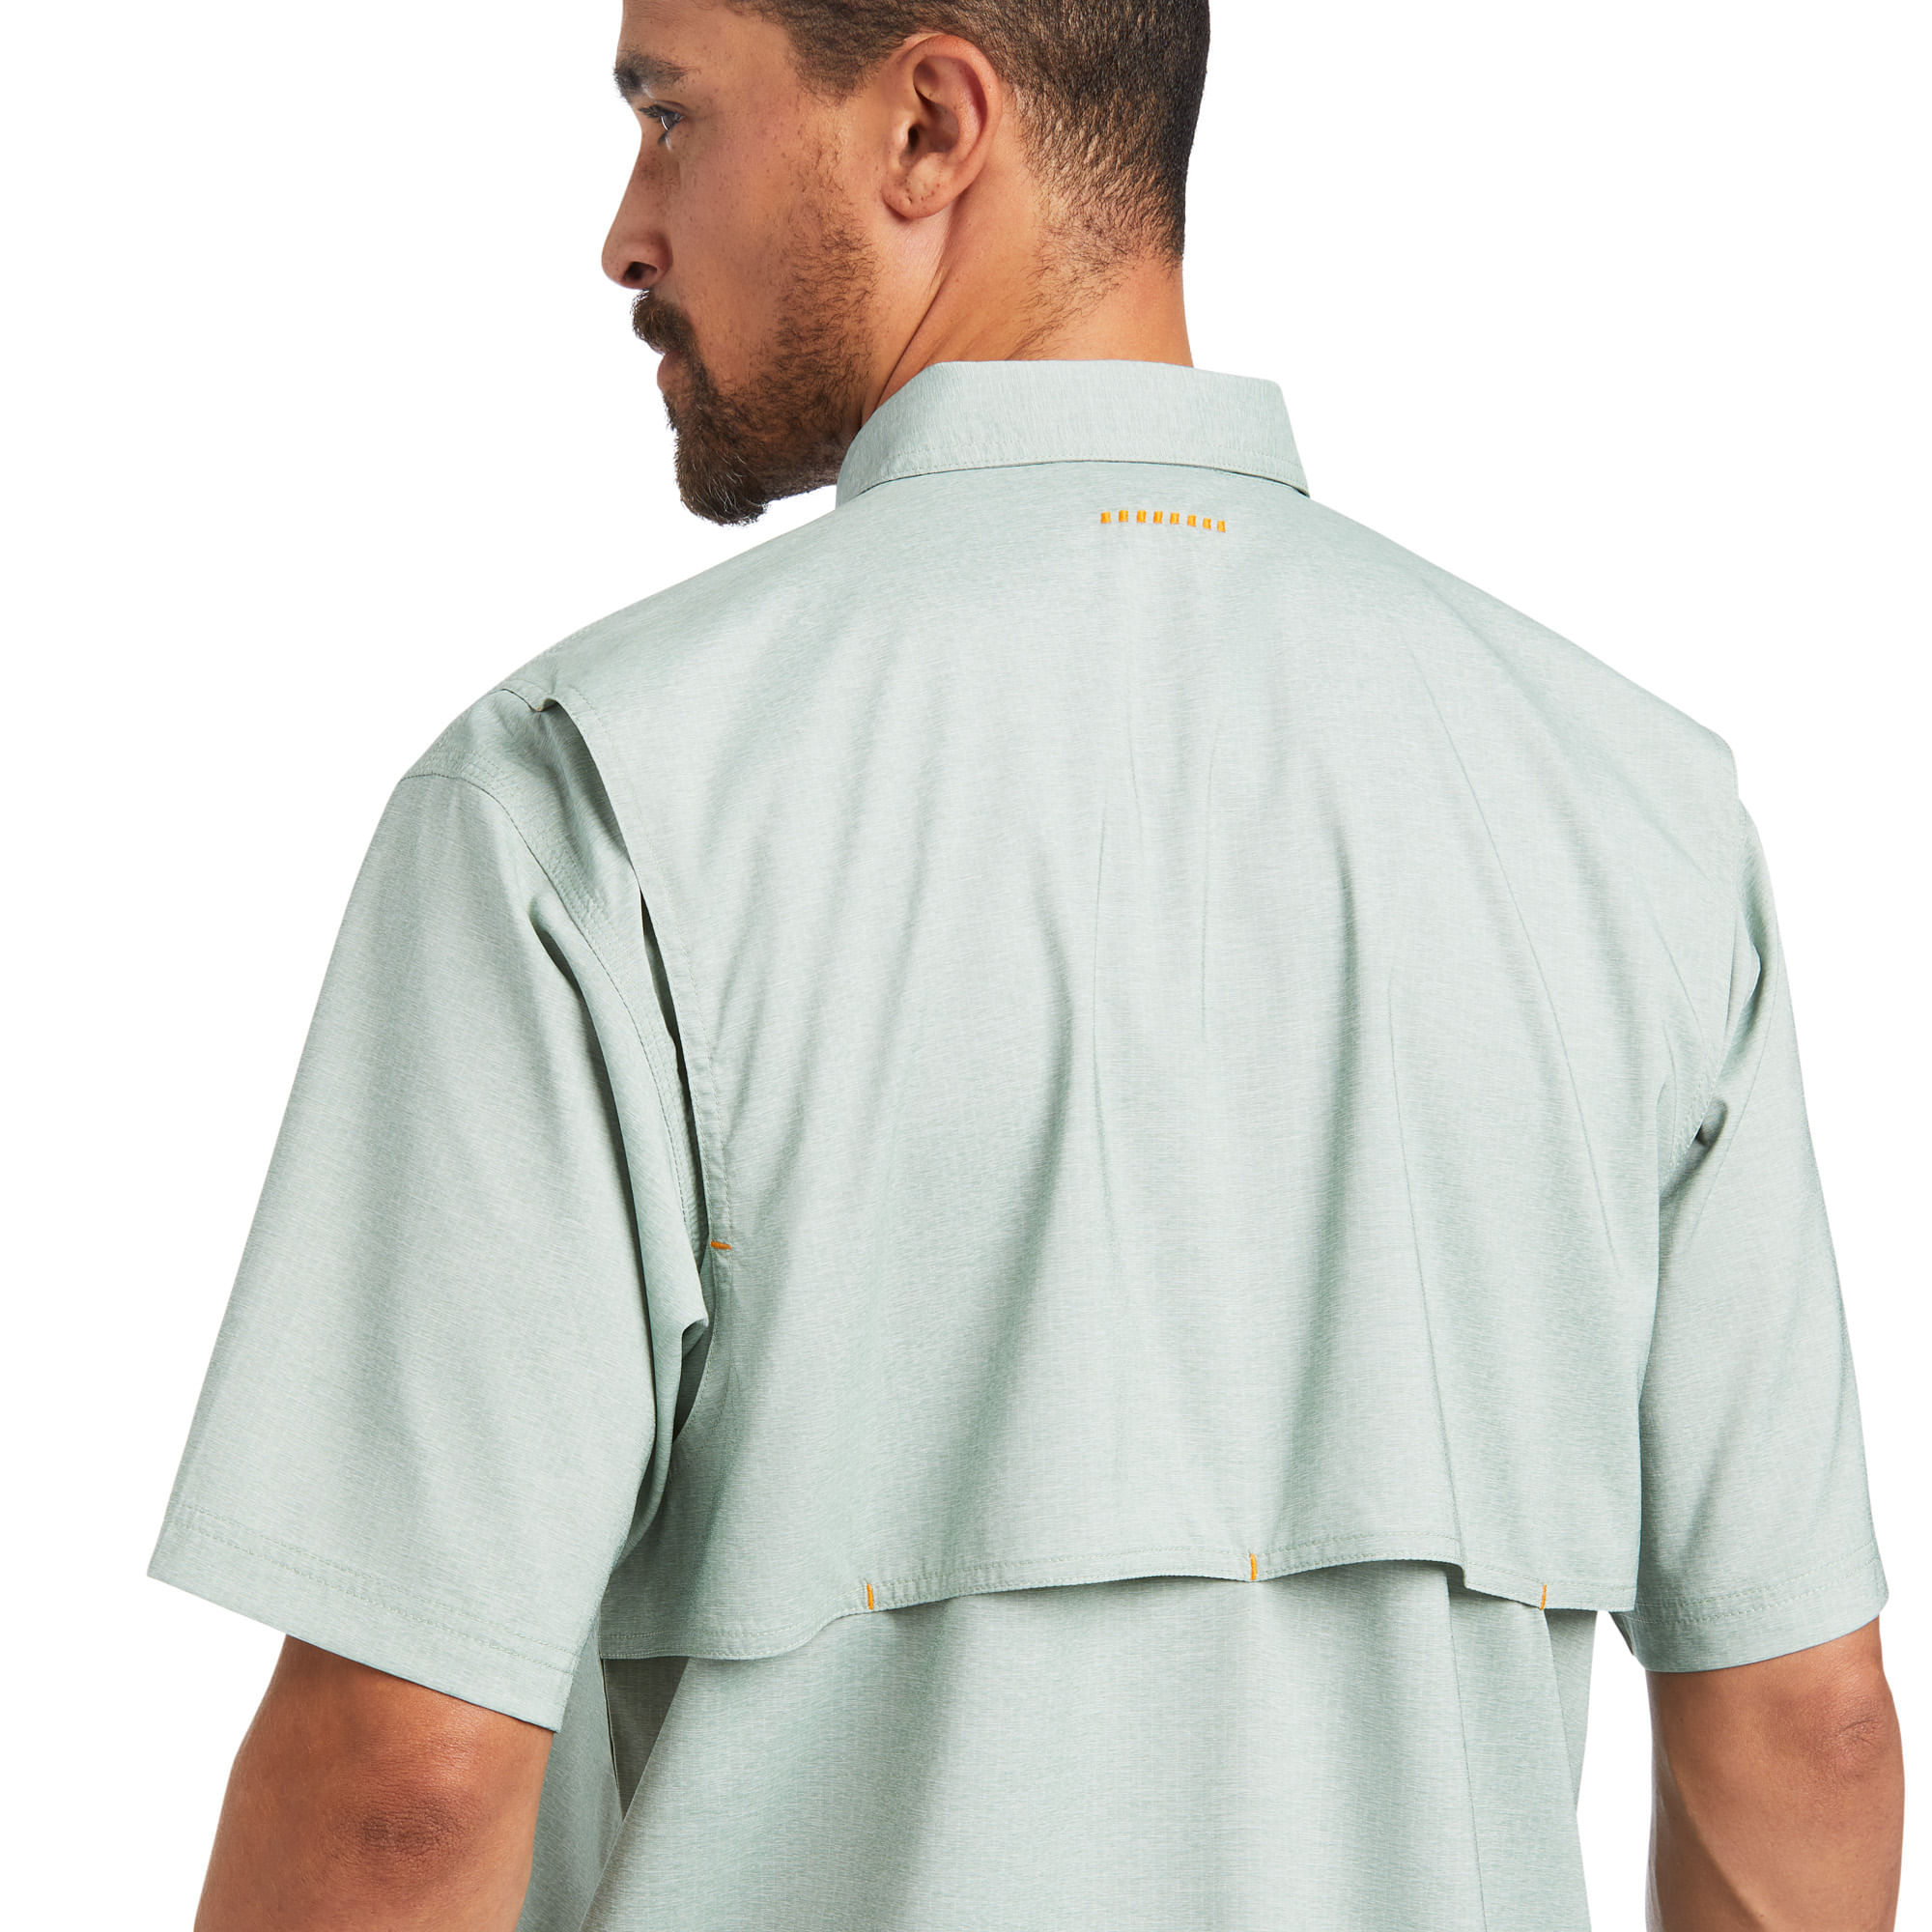 Ariat Mens Light Green Fishing Shirt Short Sleeve Shirt